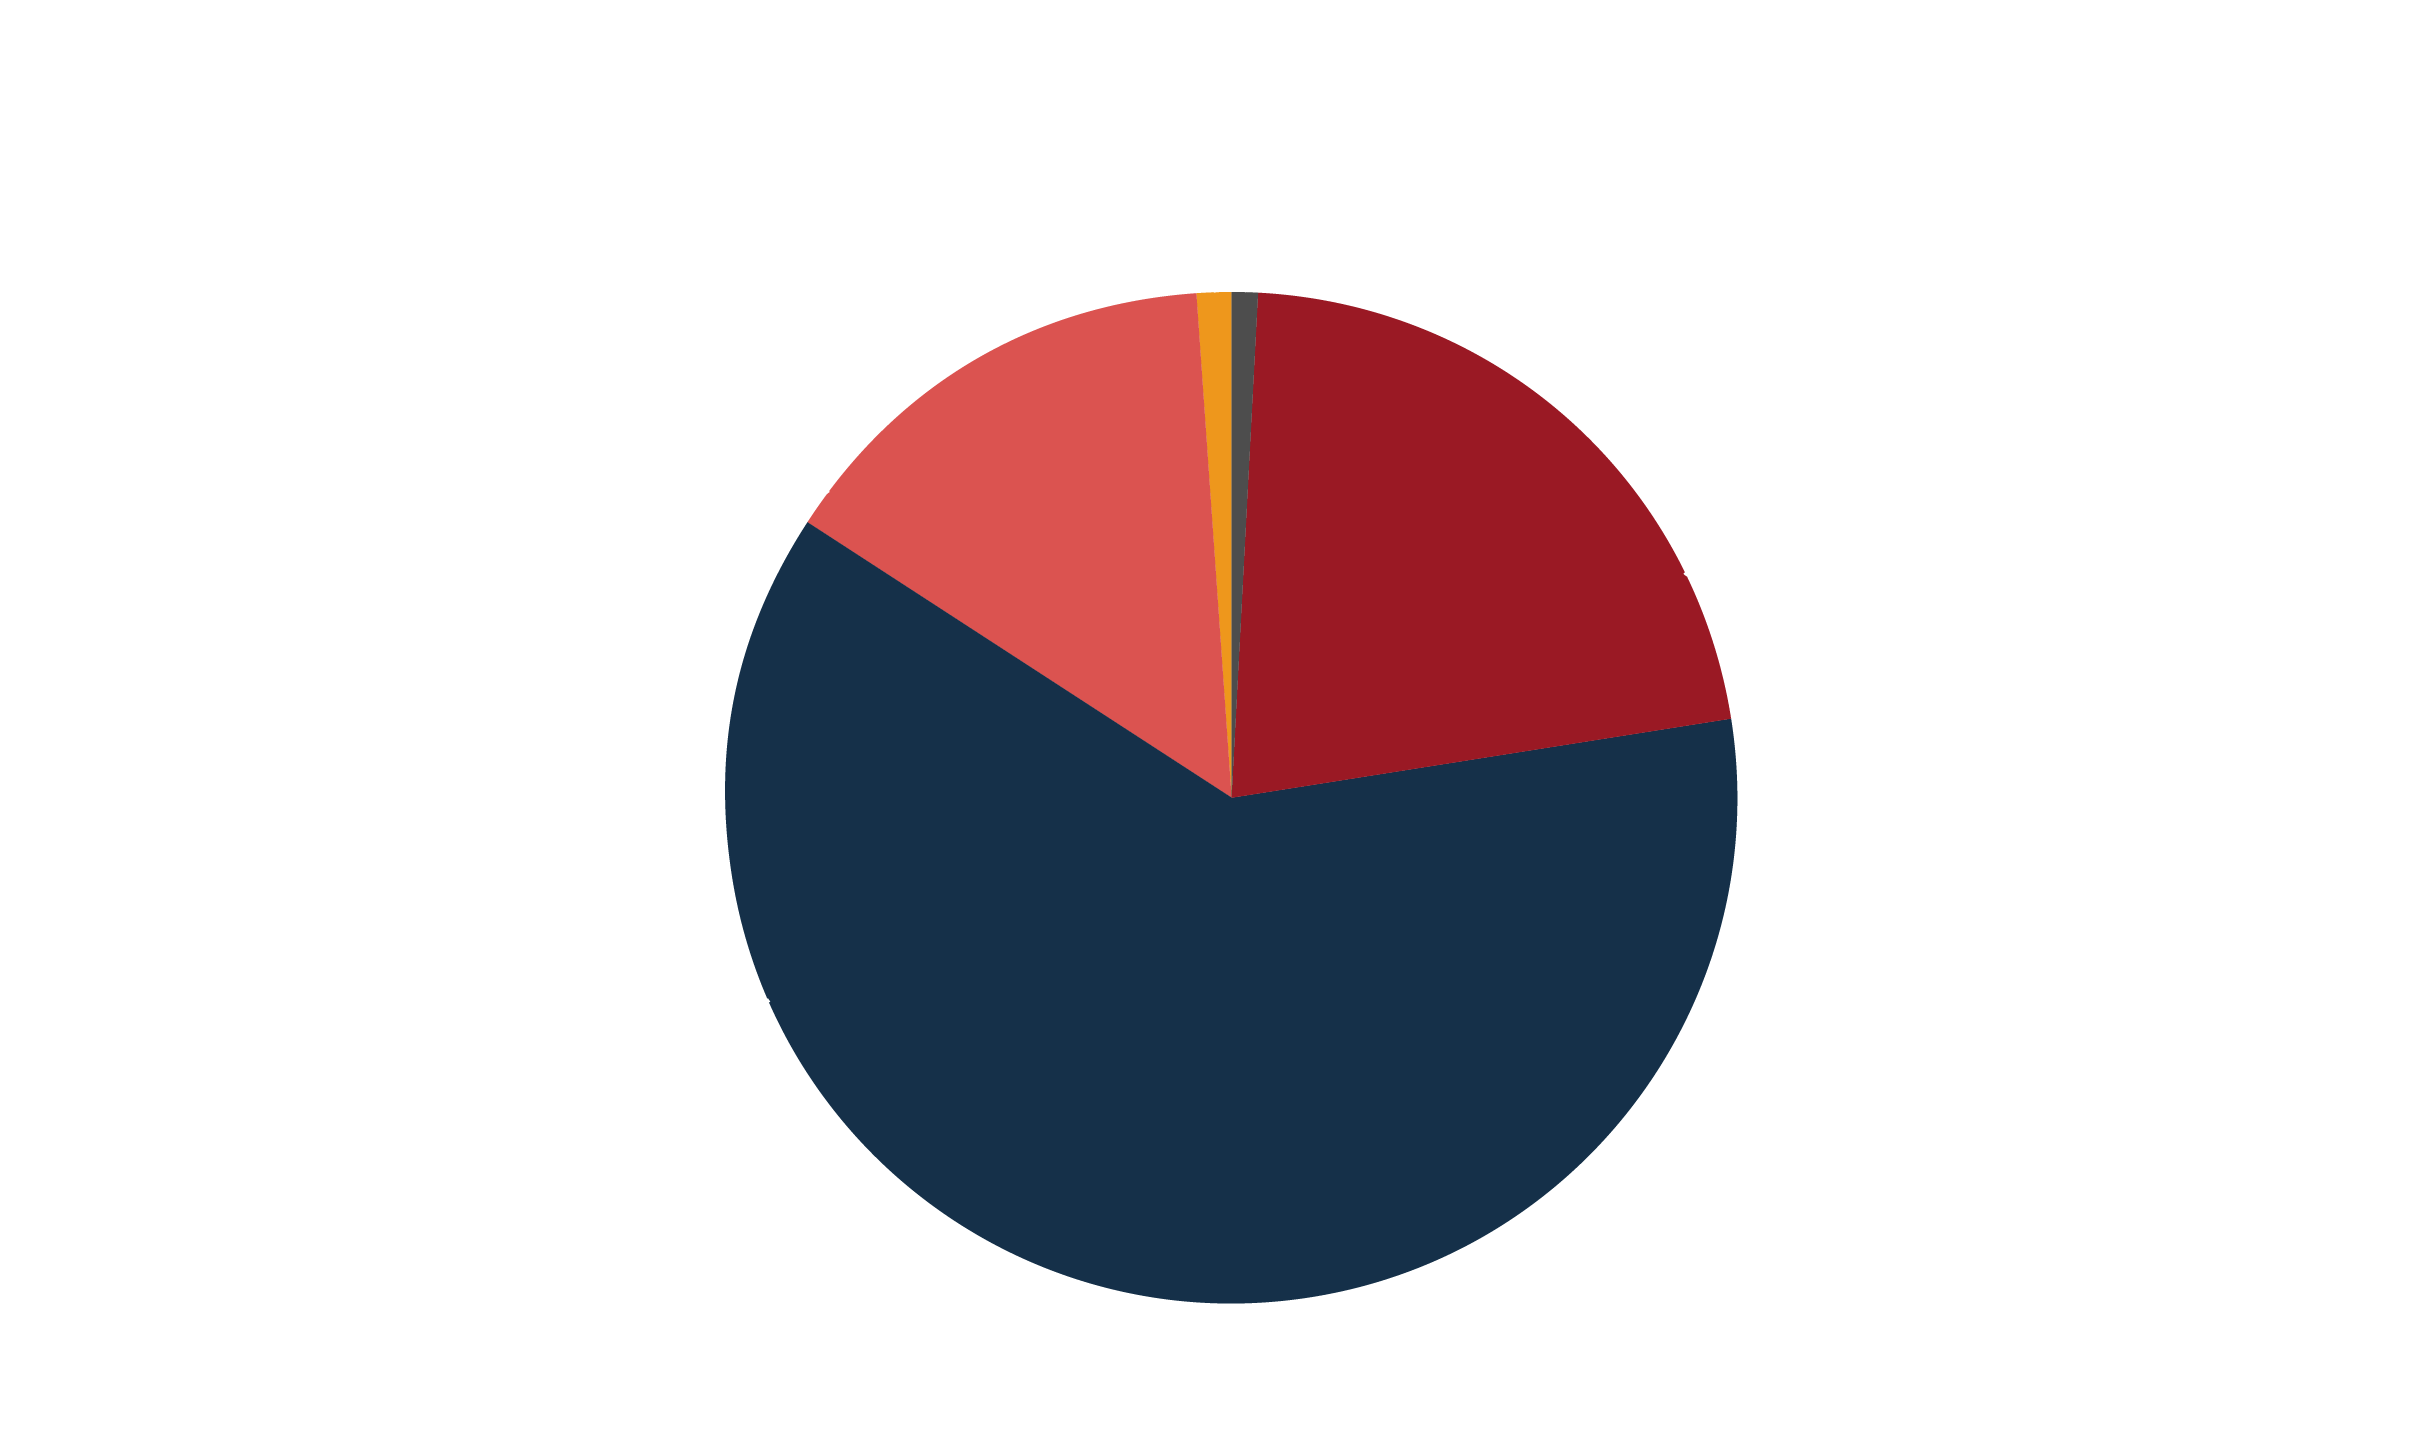 Pie chart showing funding sources for the Hazardous Waste Management Program